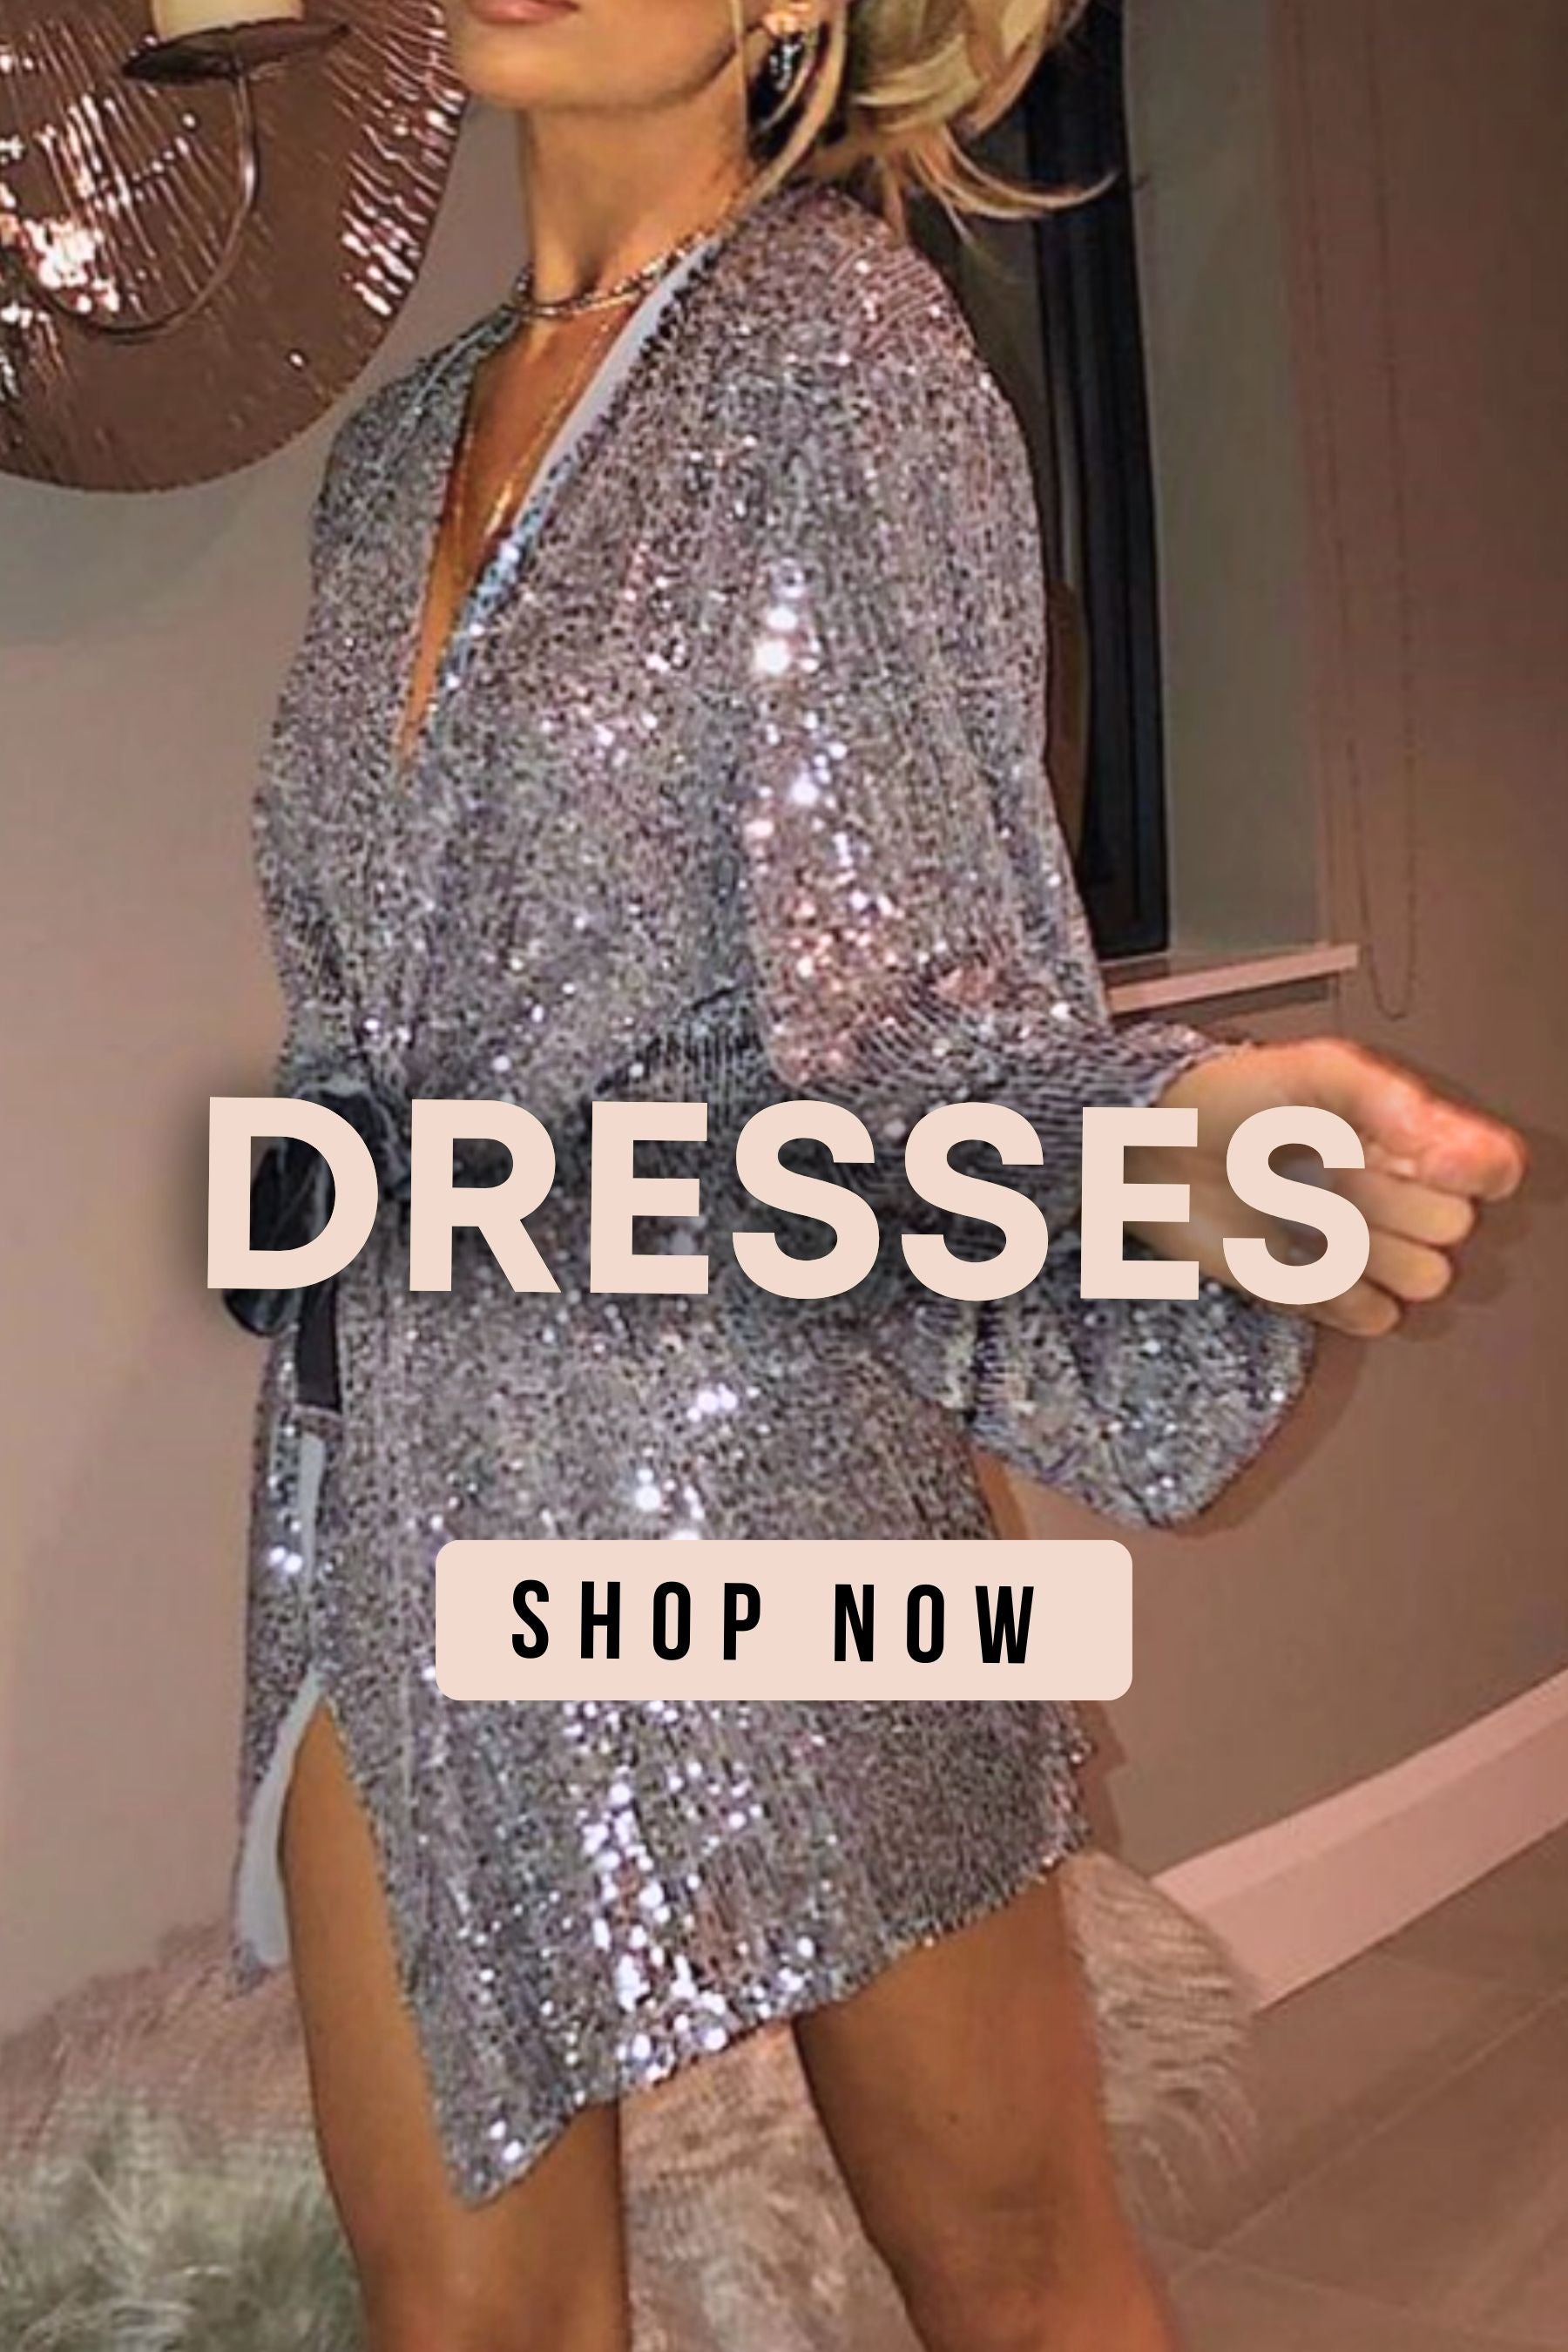 Buy Lipsy Gold Petite Sequin Bardot Split Drape Maxi Dress from